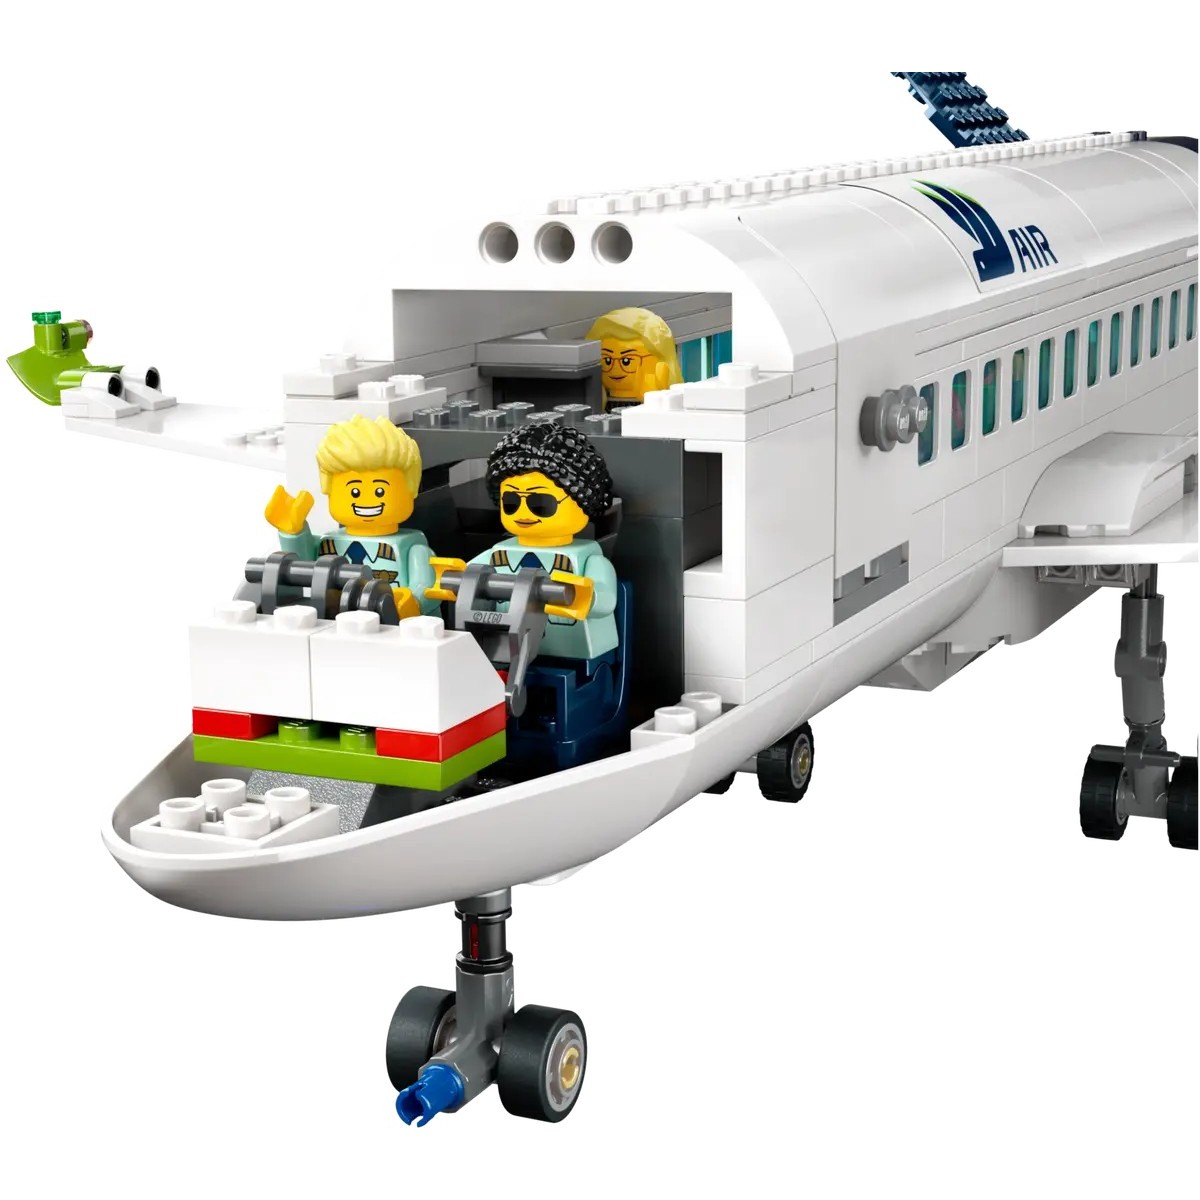 LEGO CITY OSOBNE LIETADLO /60367/ posledný kus